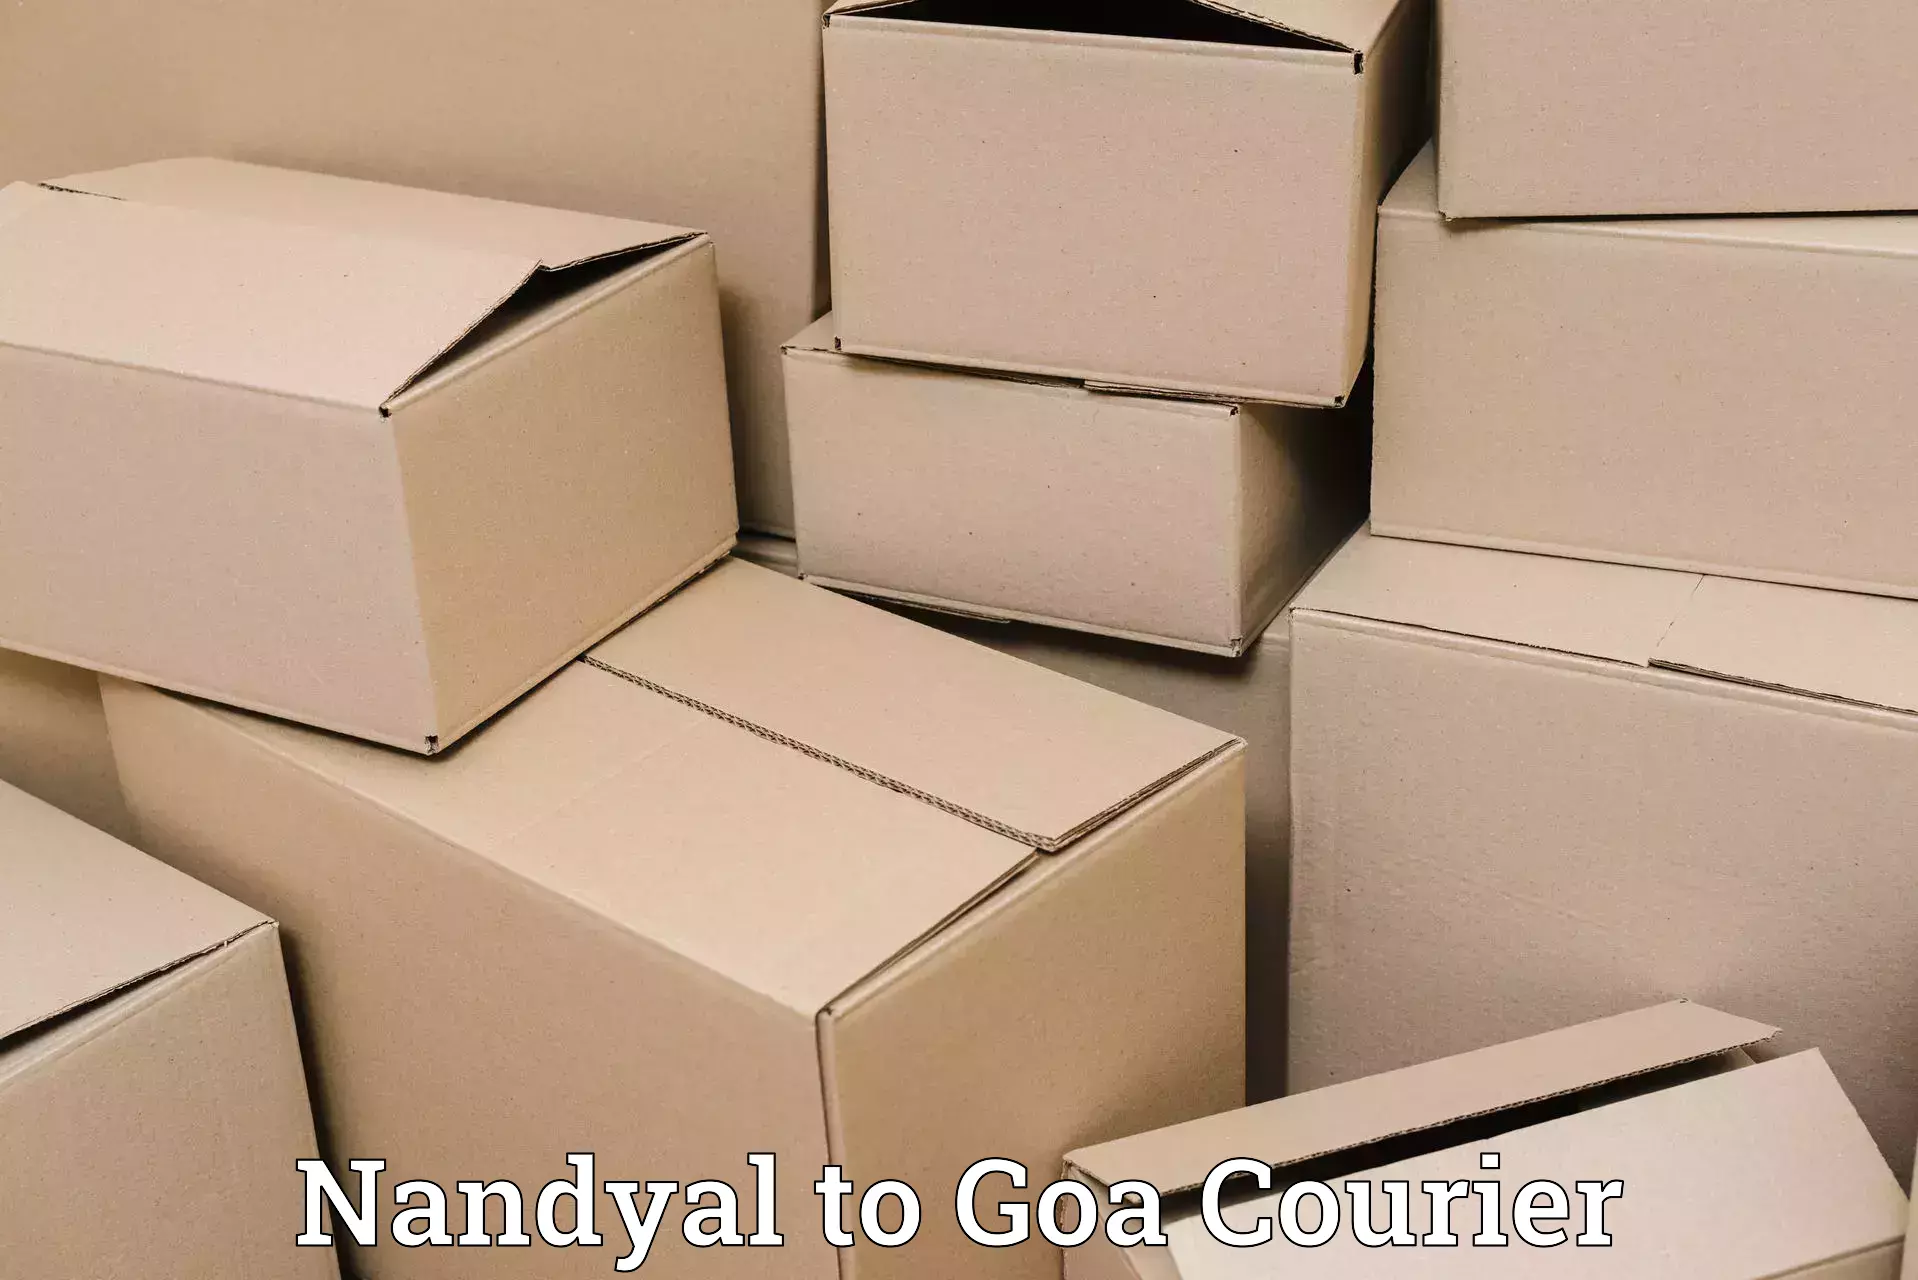 Online shipping calculator Nandyal to Panaji